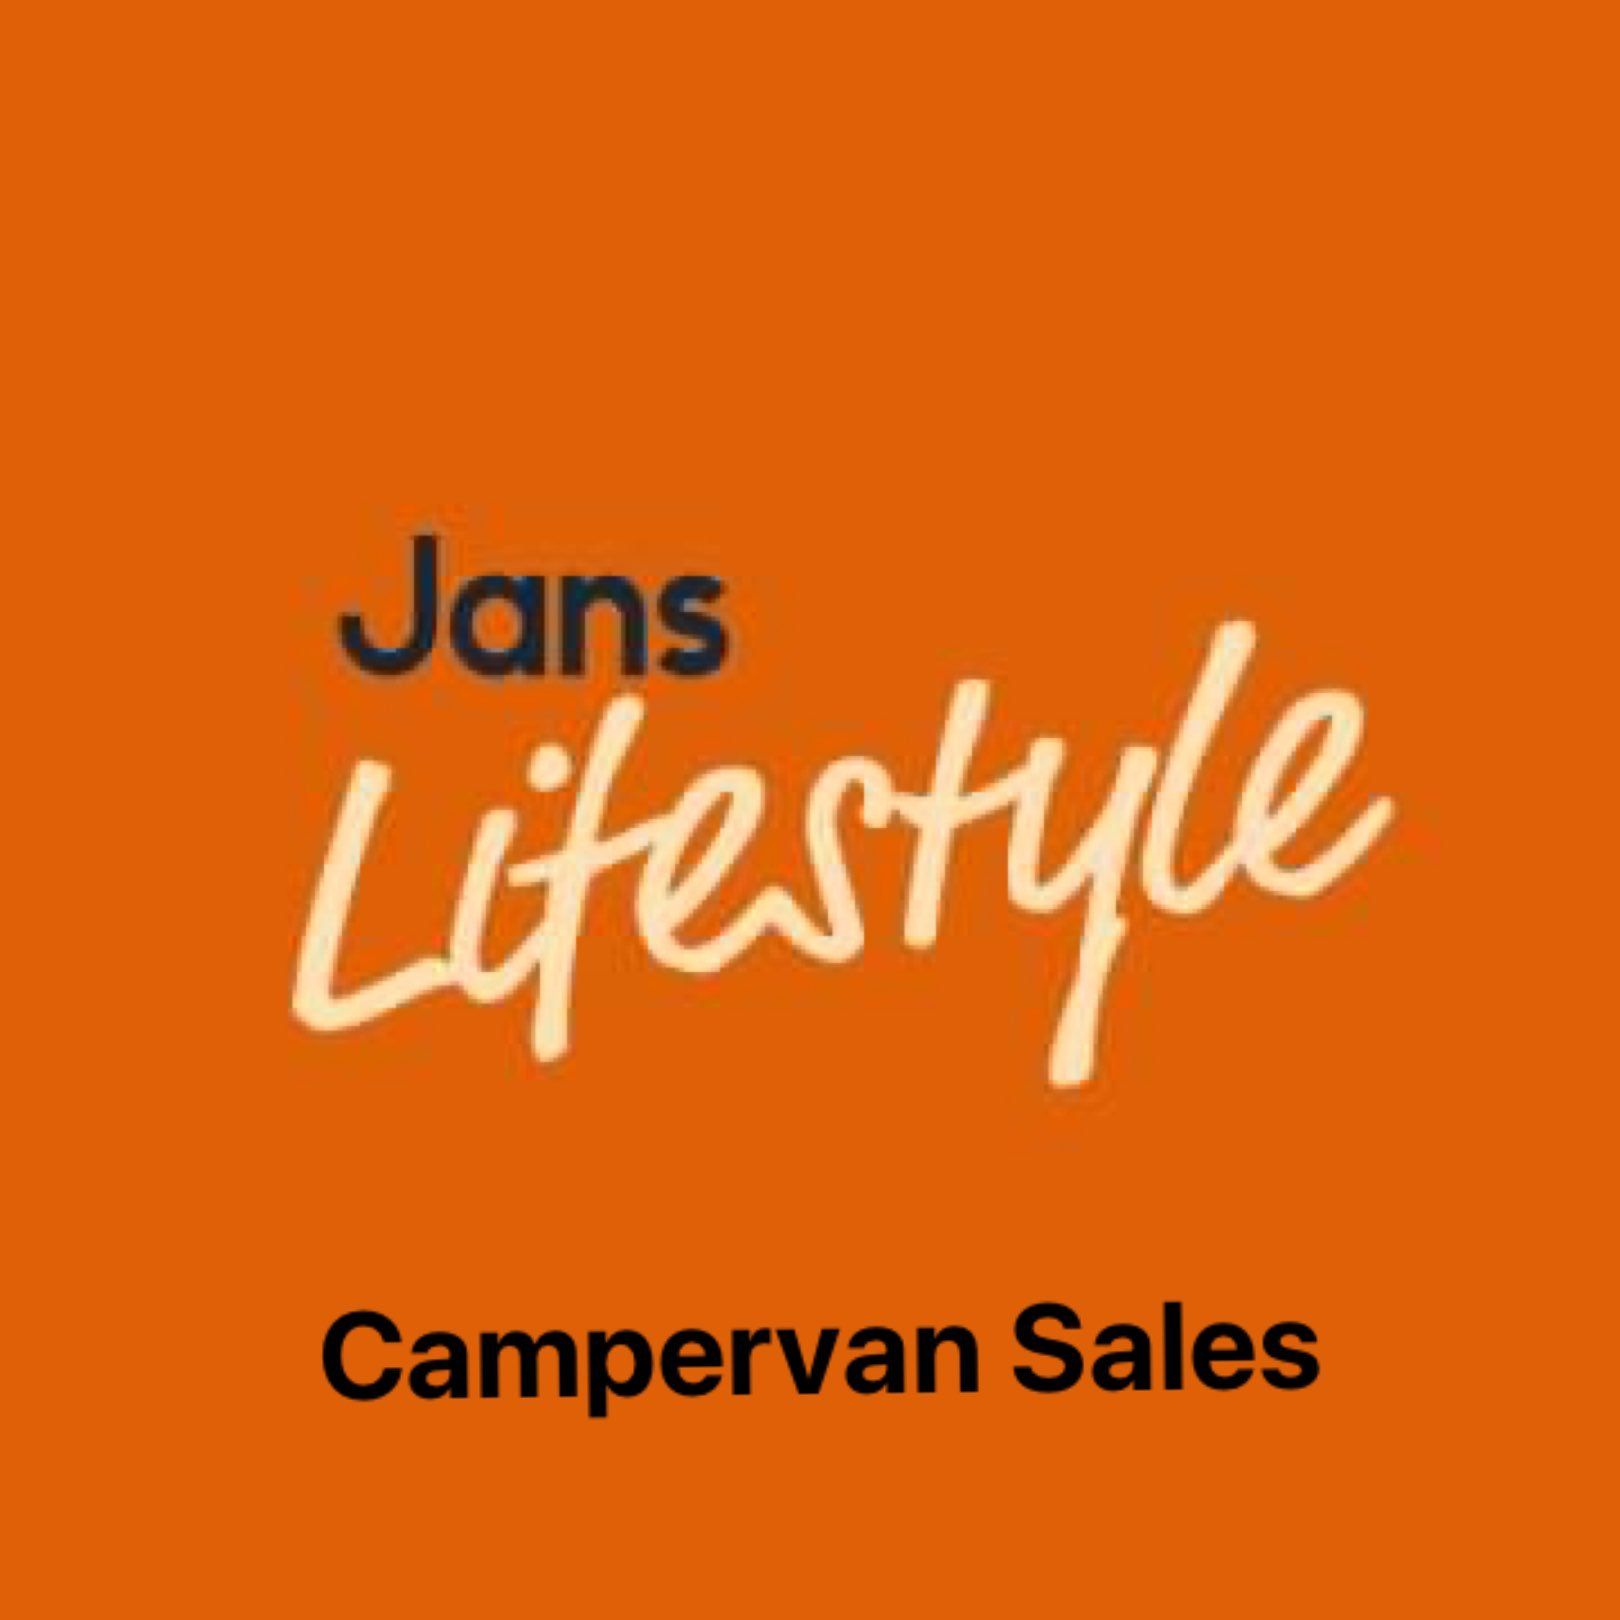 JANS Lifestyle Campervan Sales- CampingNI